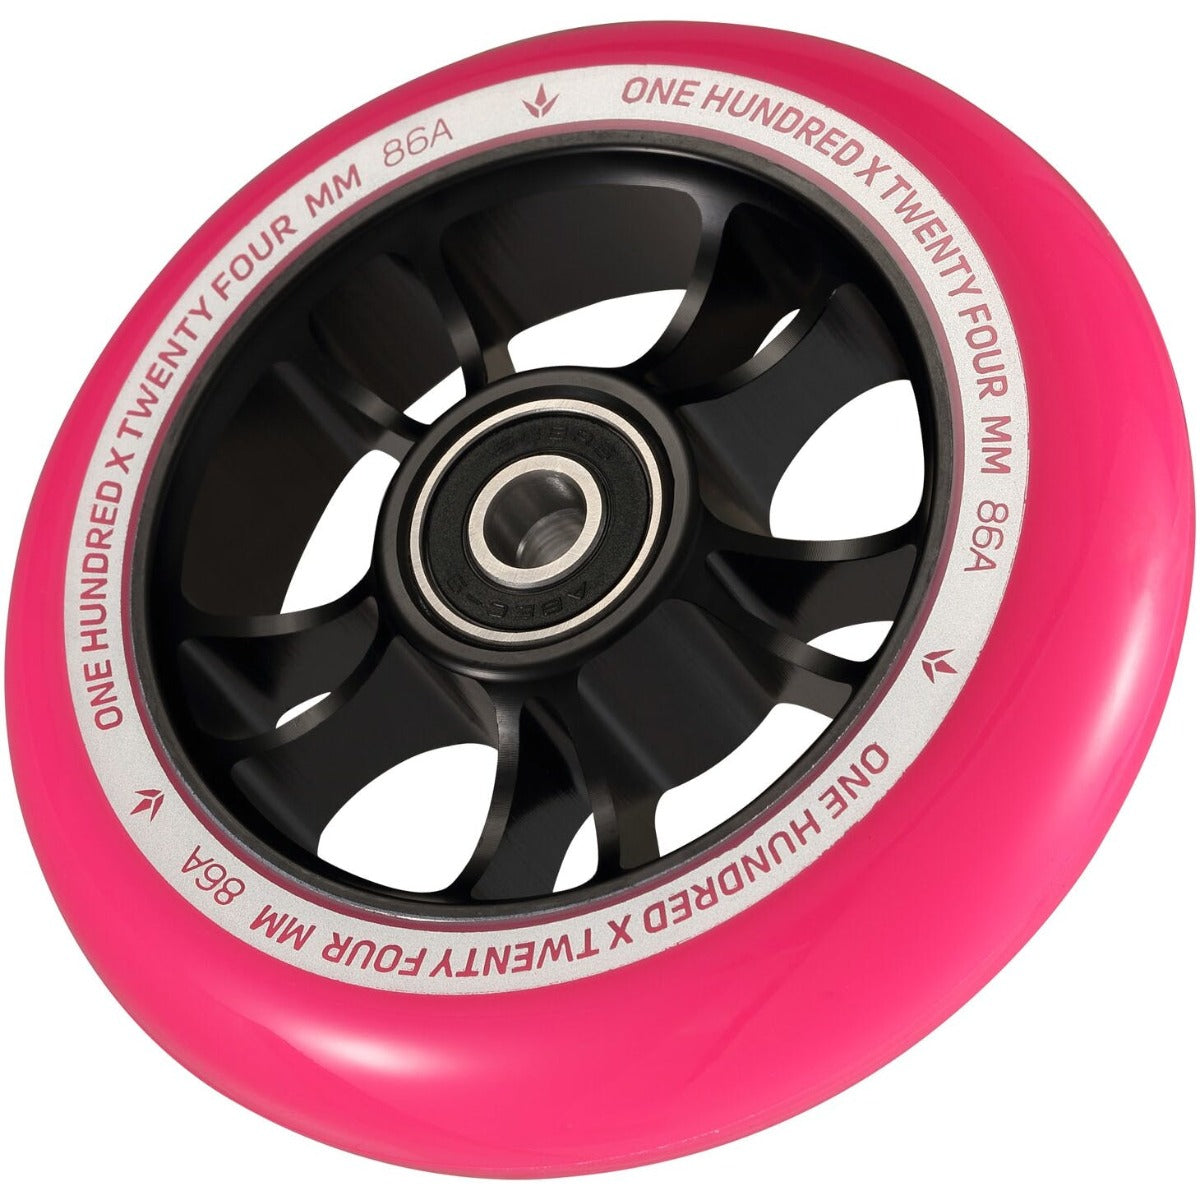 Blunt Envy 100mm Stunt Scooter Wheel - Black / Pink - Angle